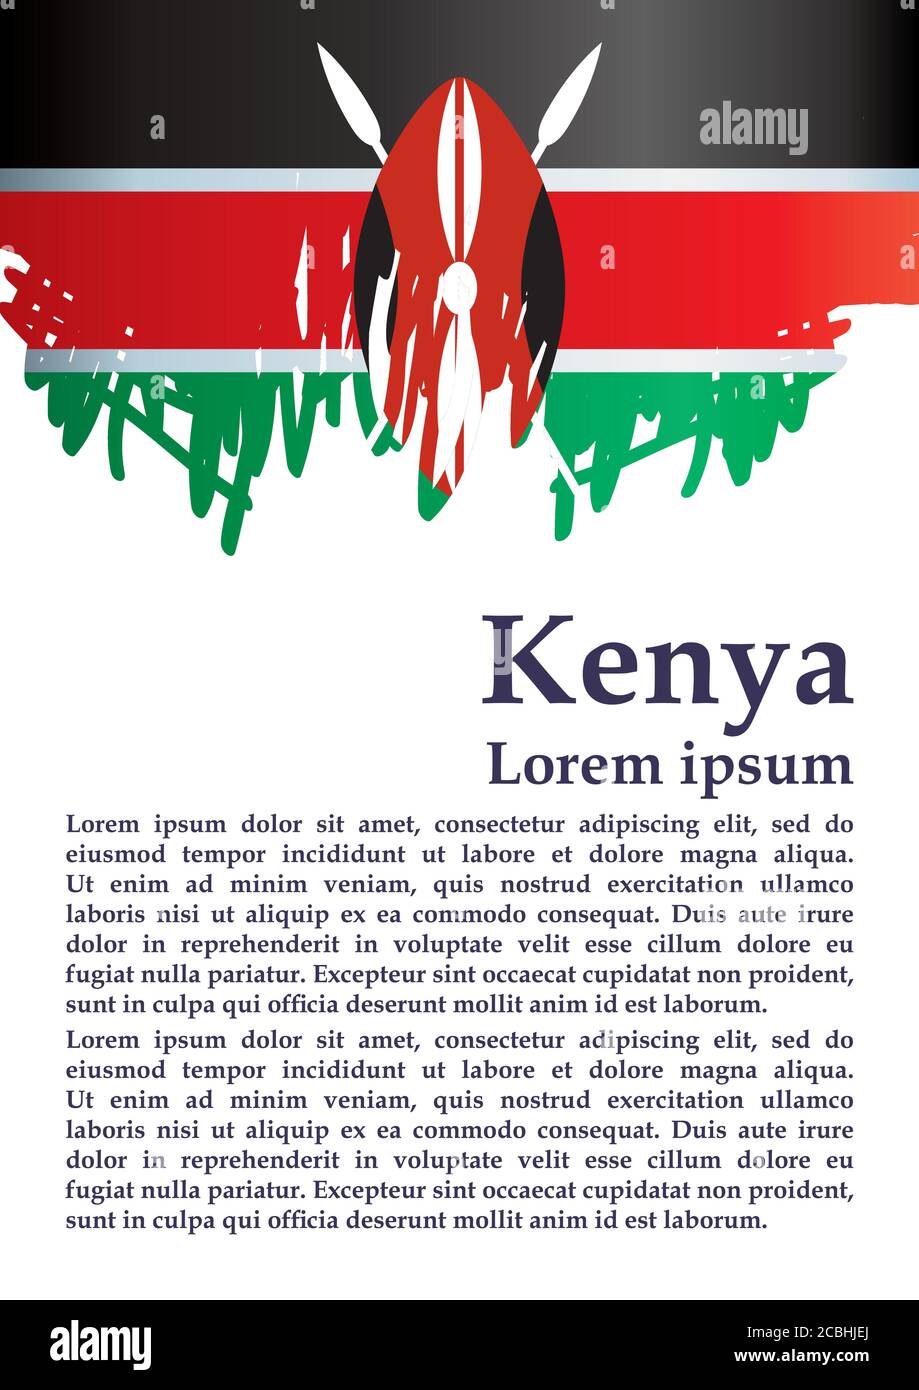 Flagge Kenias, Republik Kenia. Vorlage für Award Design, ein offizielles Dokument mit der Flagge Kenias. Helle, farbenfrohe Vektorgrafik. Stock Vektor